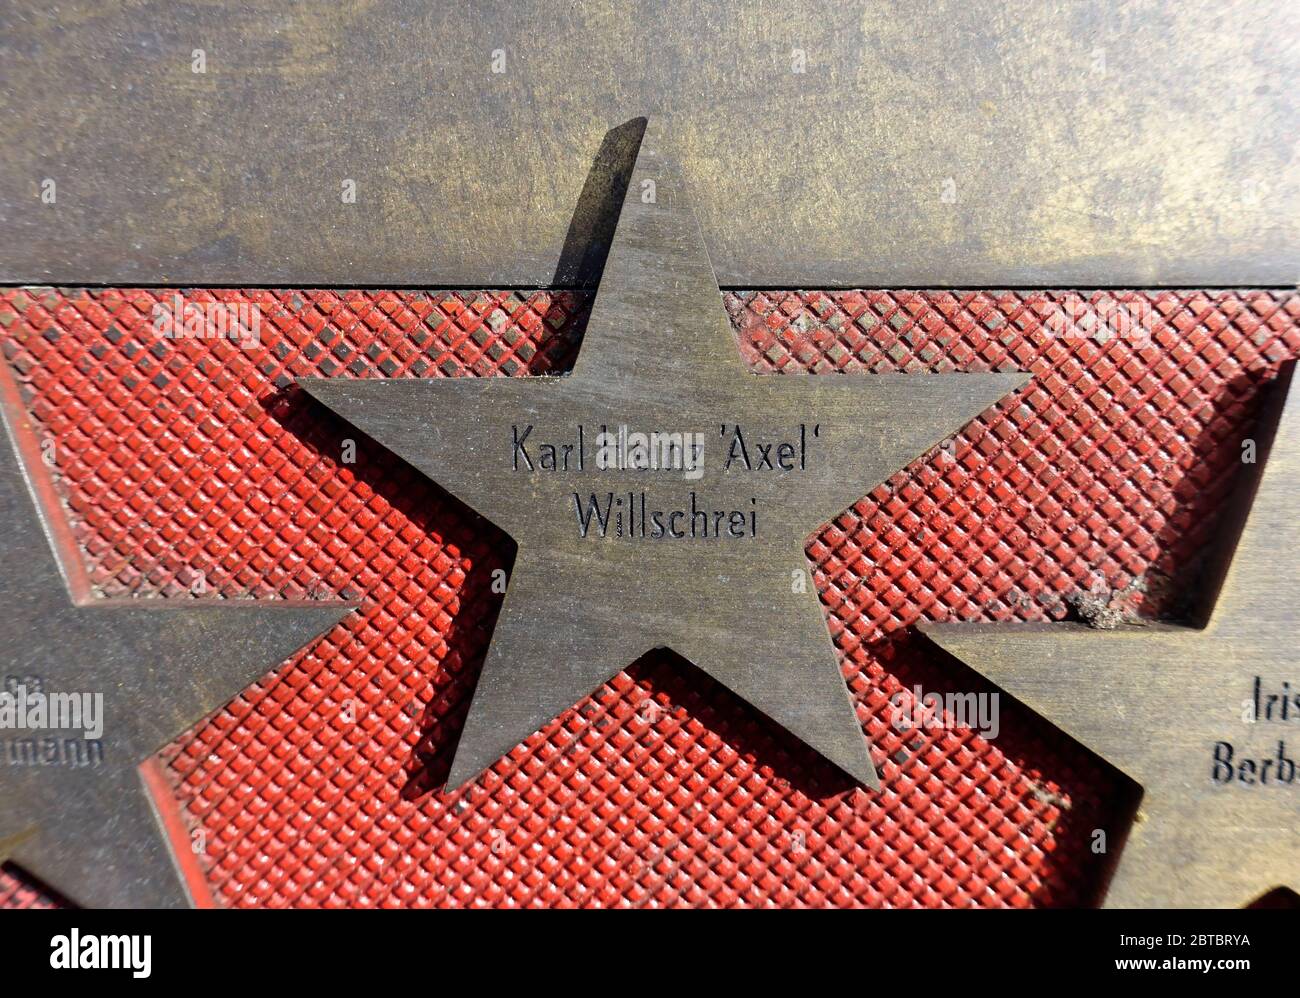 Estrella de Karl Heinz 'Axel' Willschrei, Boulevard de las estrellas, Berlín Foto de stock